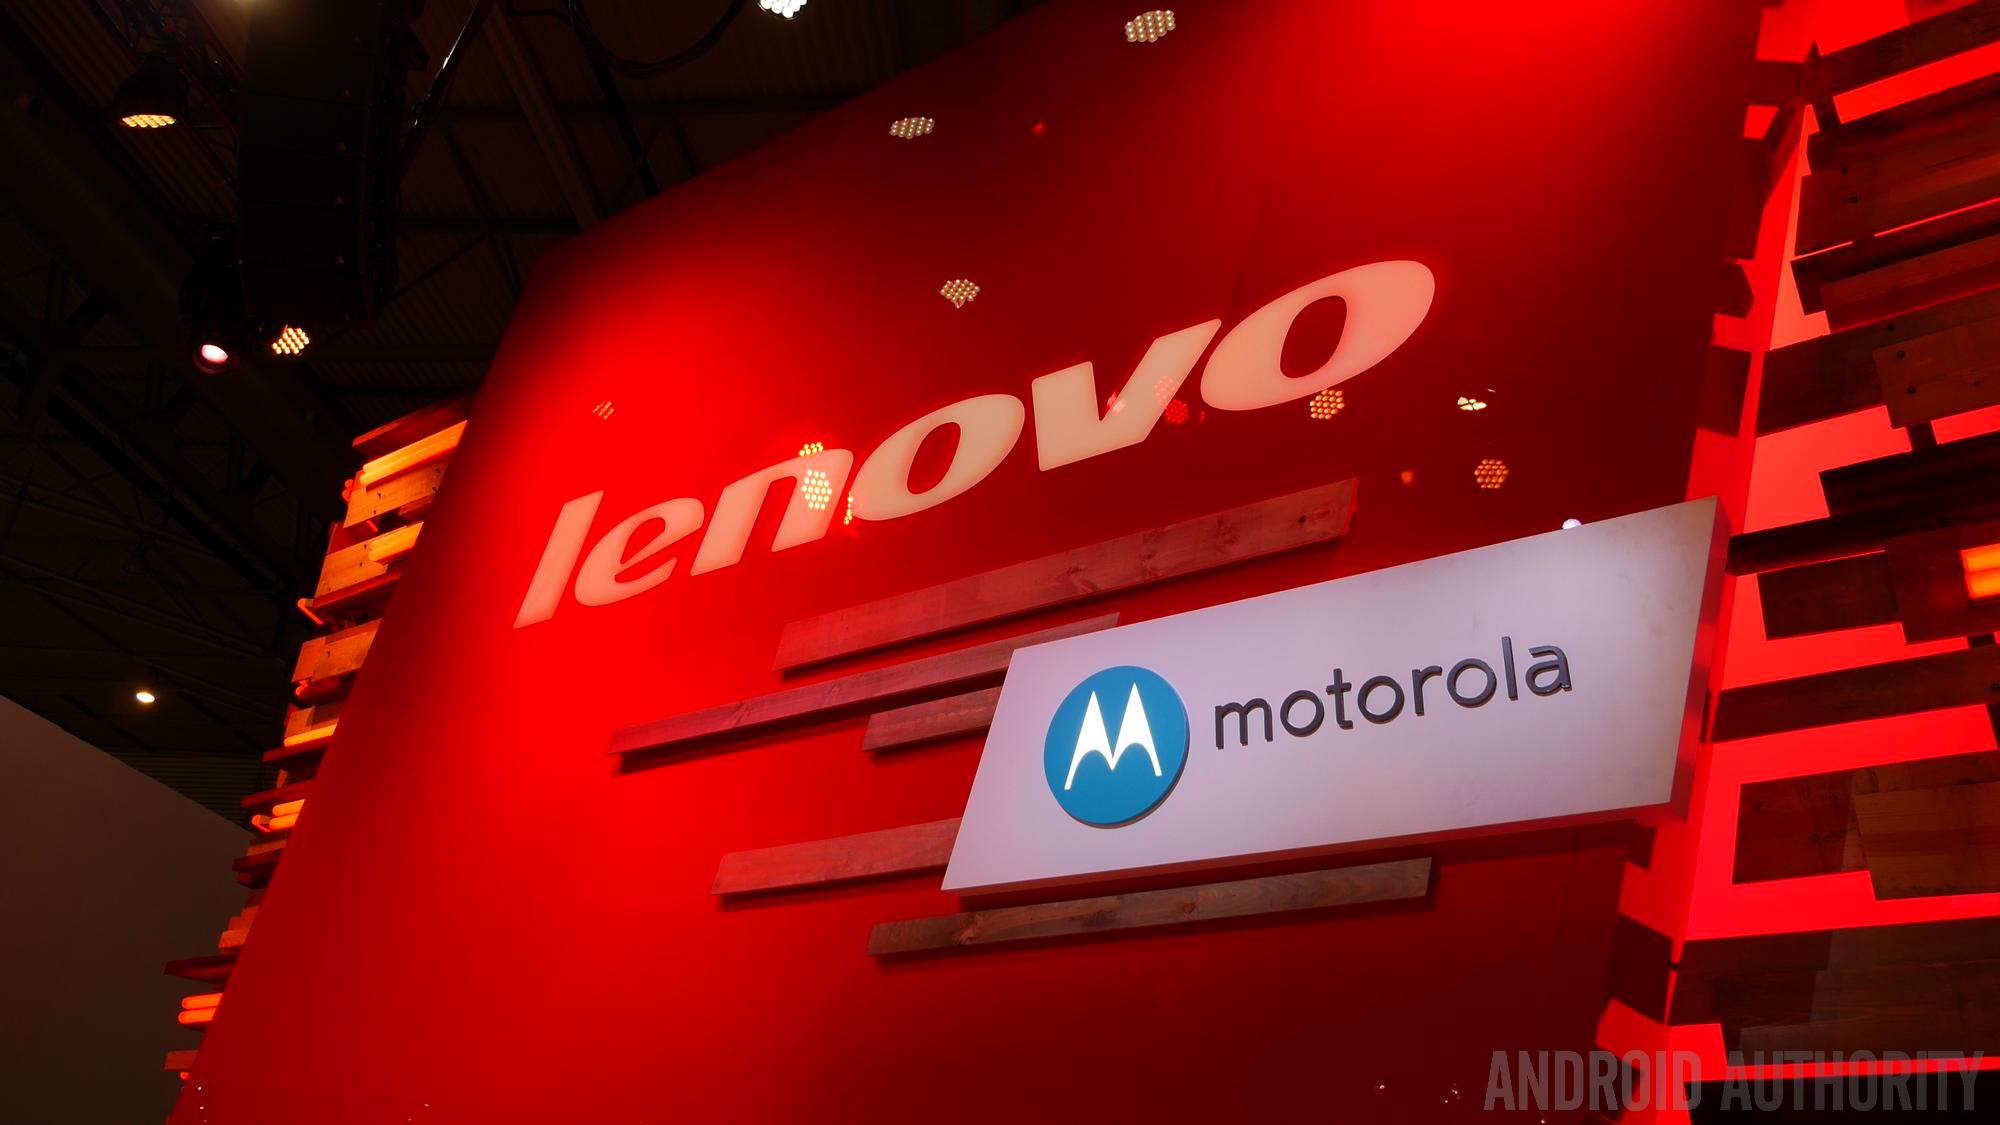 Lenovo and Motorola logos